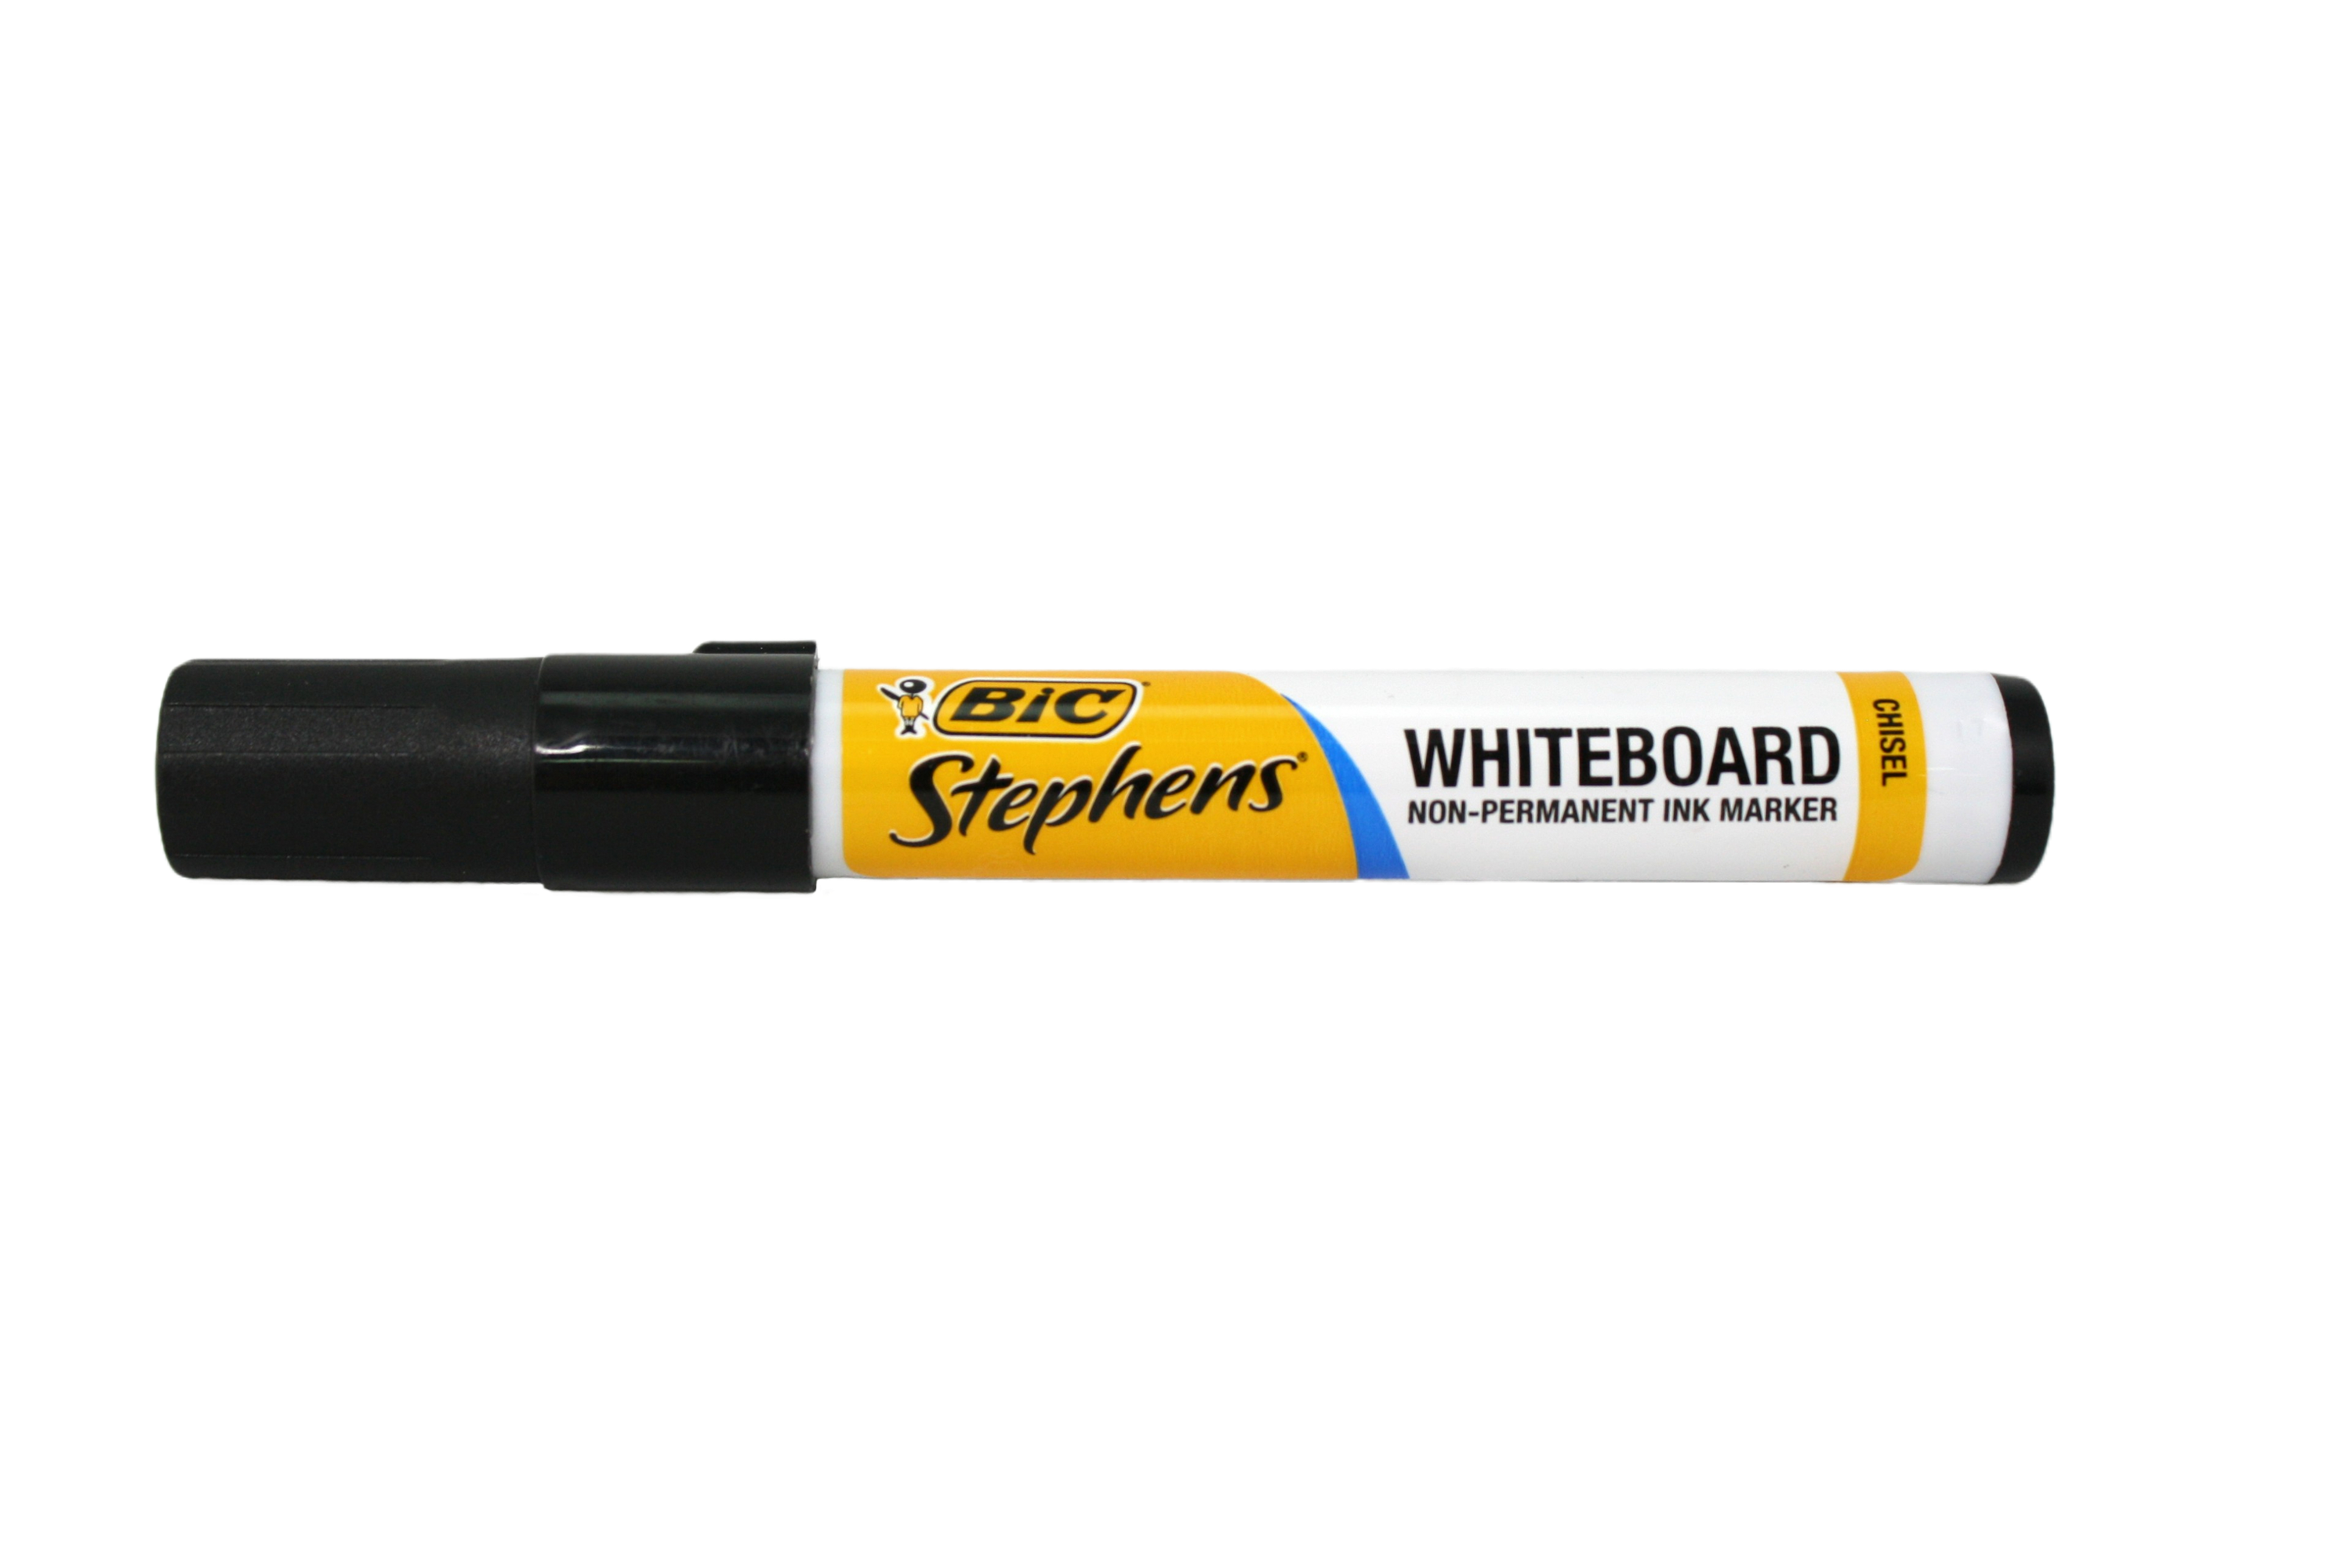 Bic Stephens Whiteboard Marker, black, lid on